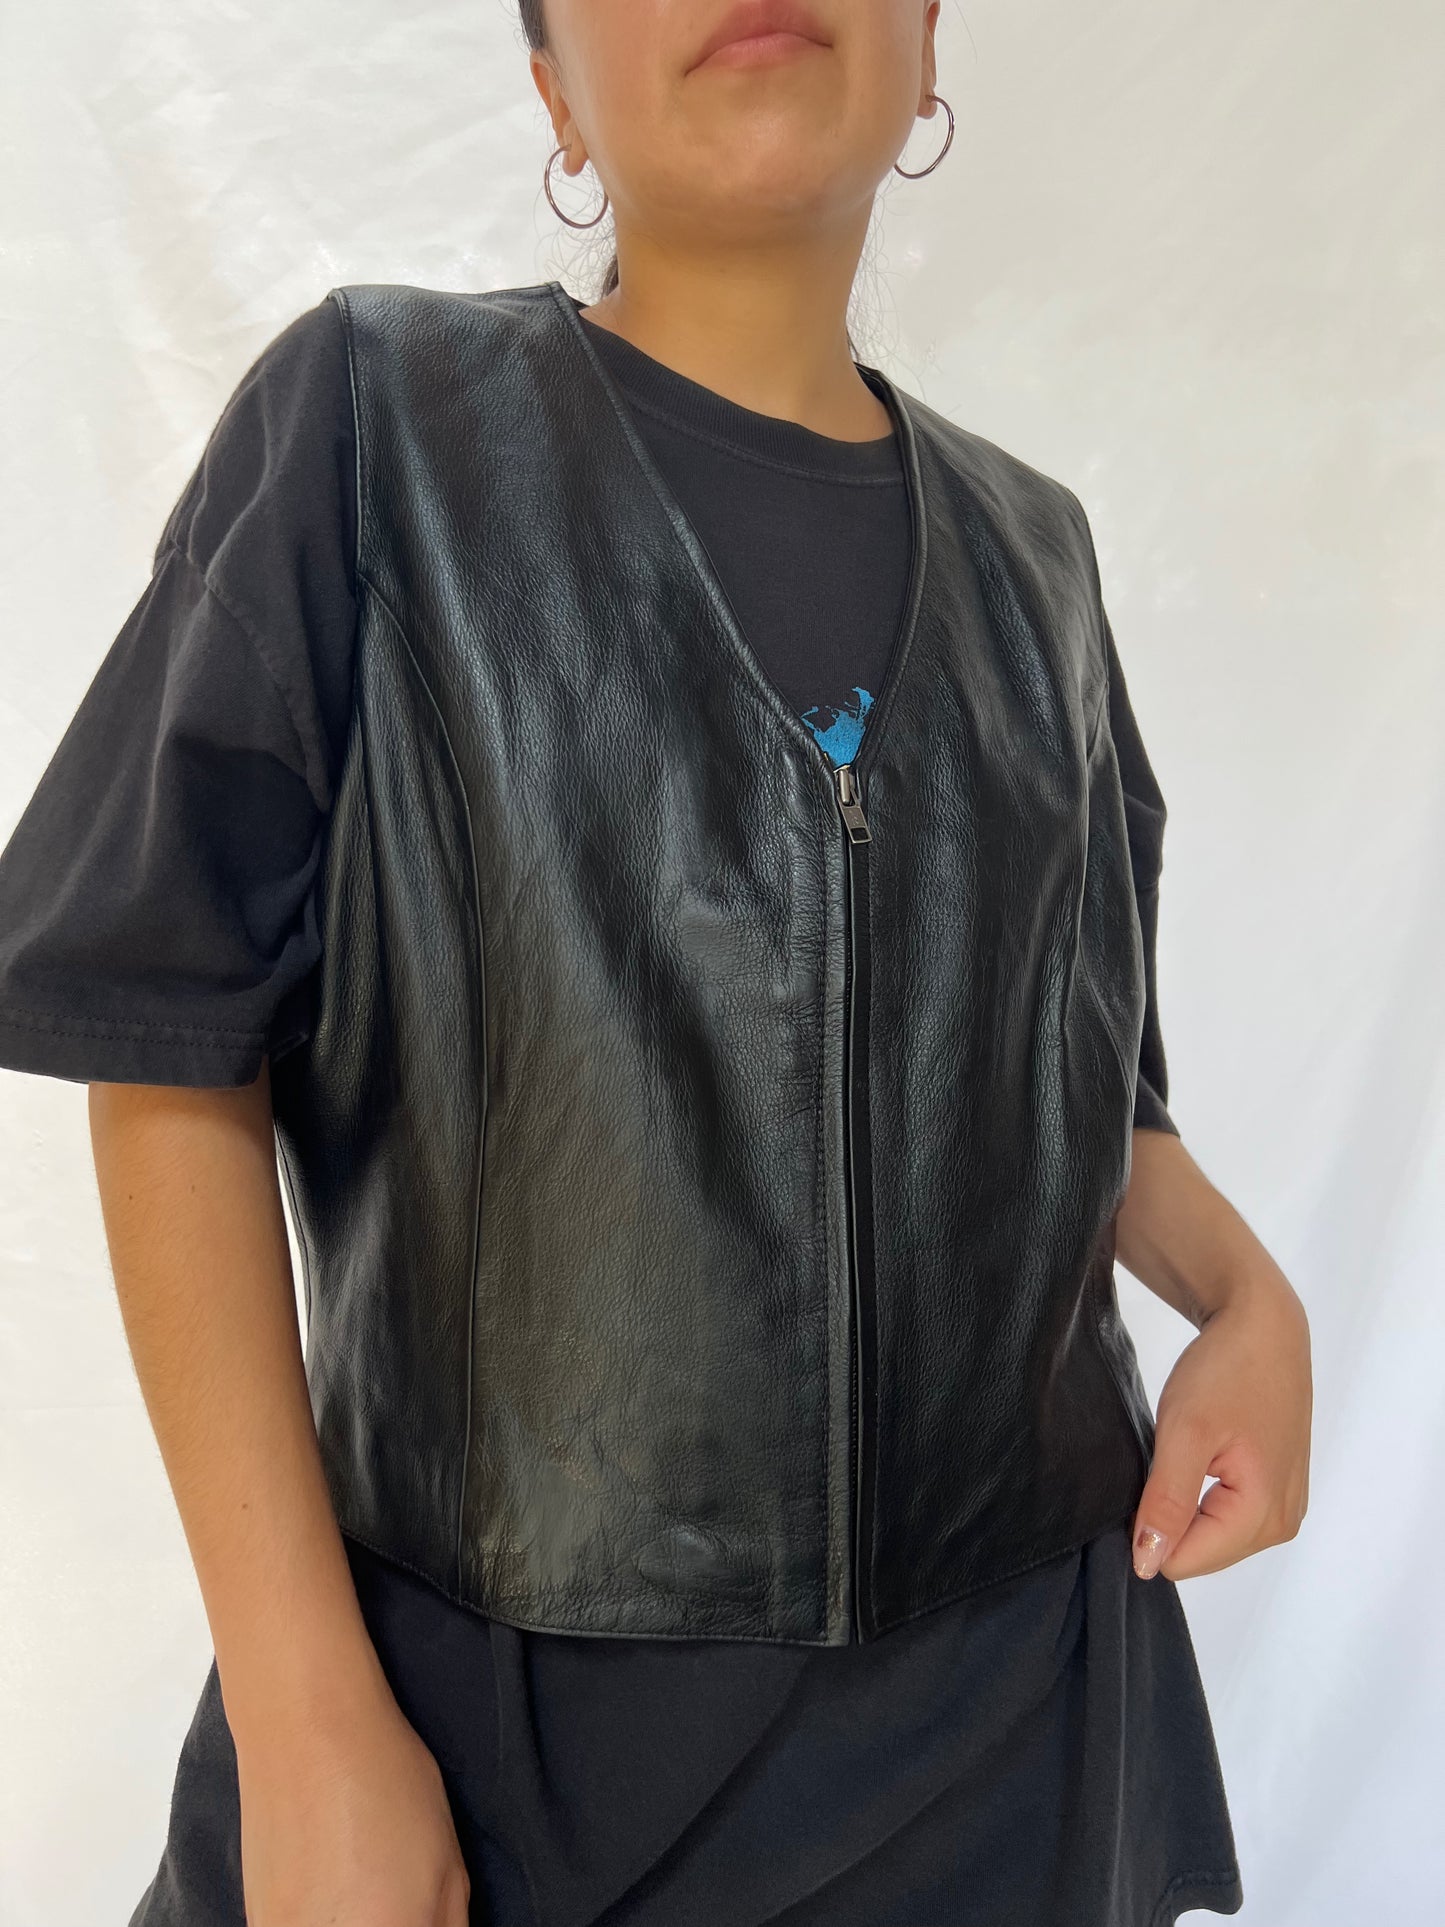 Wilsons Leather Vest - XL